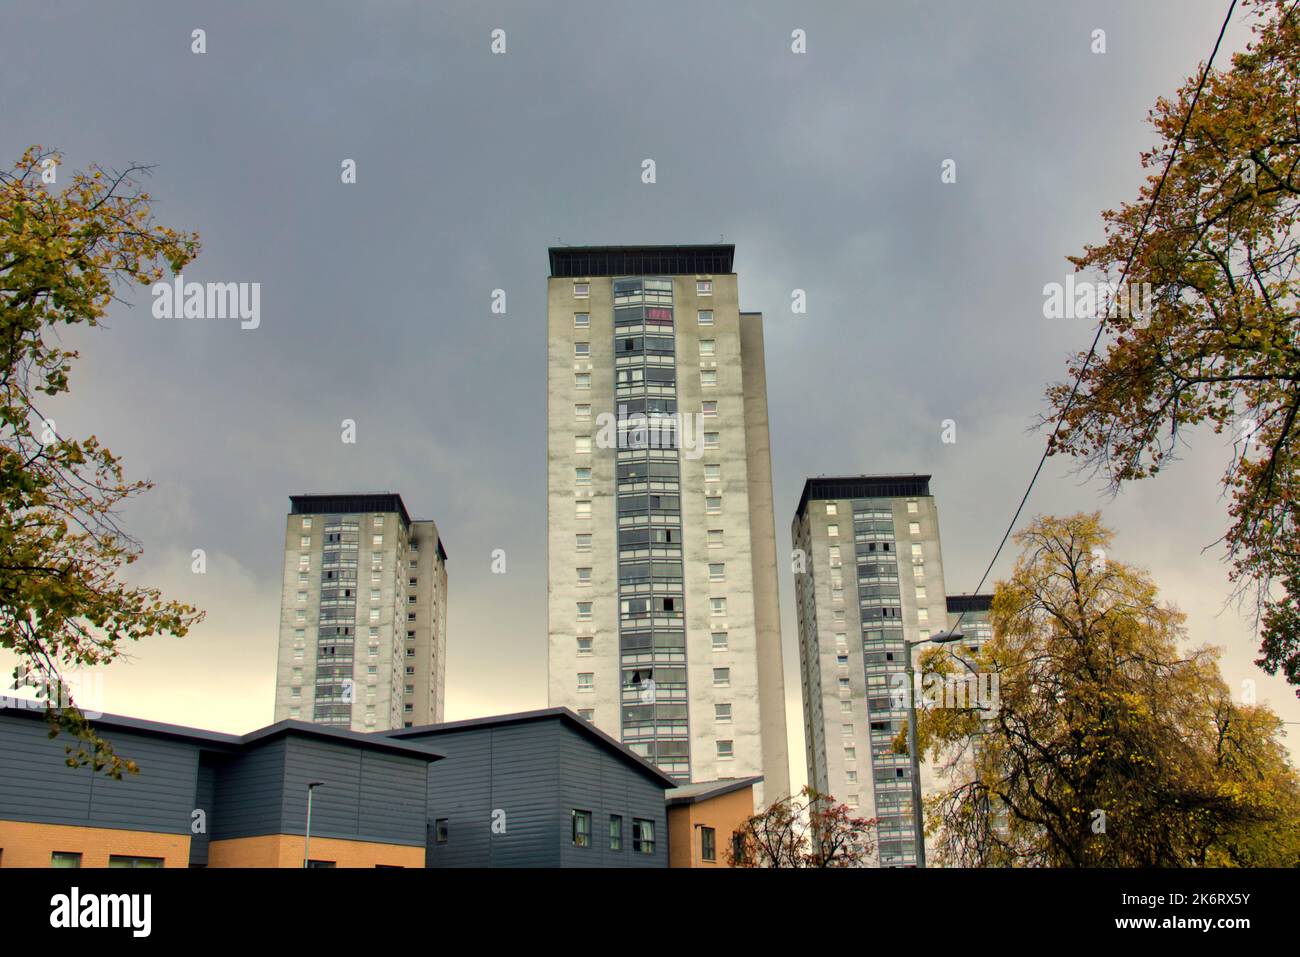 Lincoln avenue council housing brutalist architecture modern concrete towers Glasgow, Scotland, UK Stock Photo